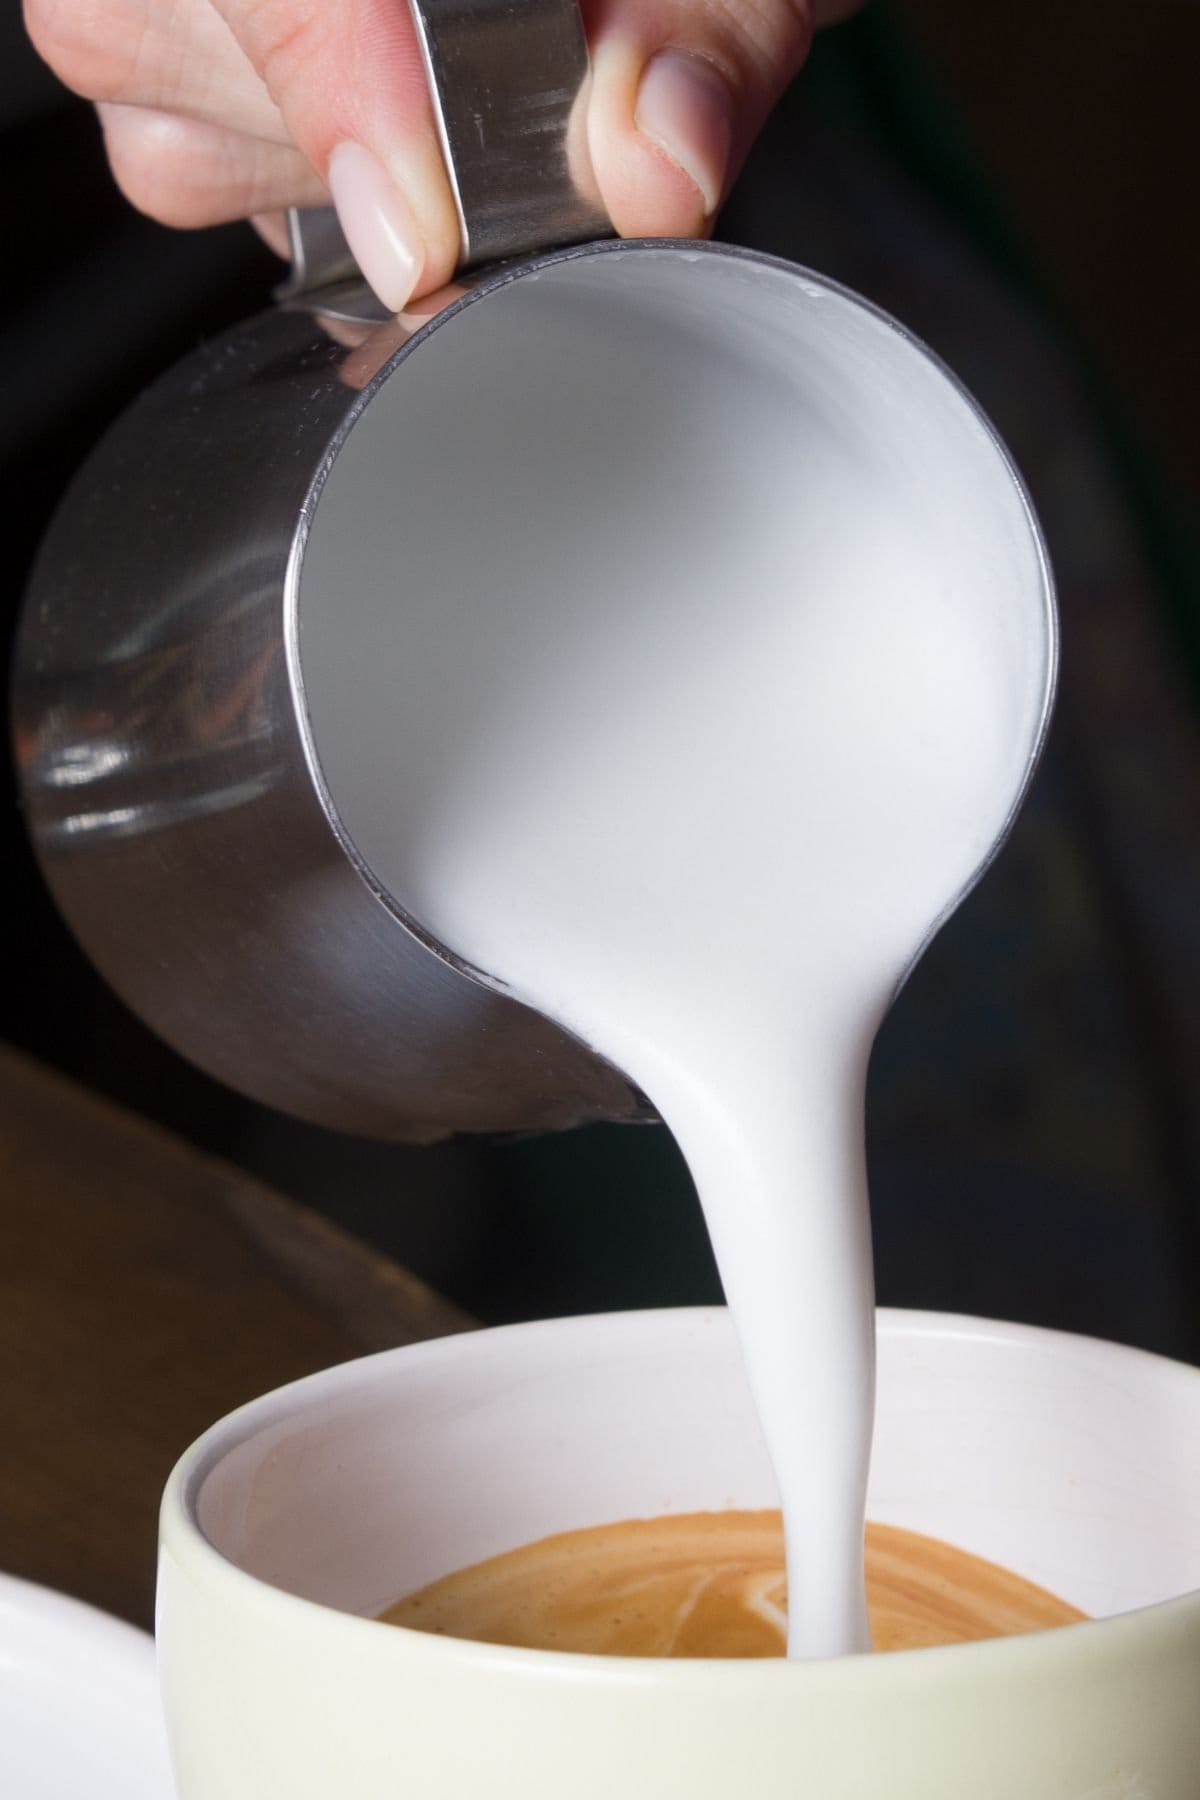 Milk Froth Off: Almond, Coconut & Rice Milk 